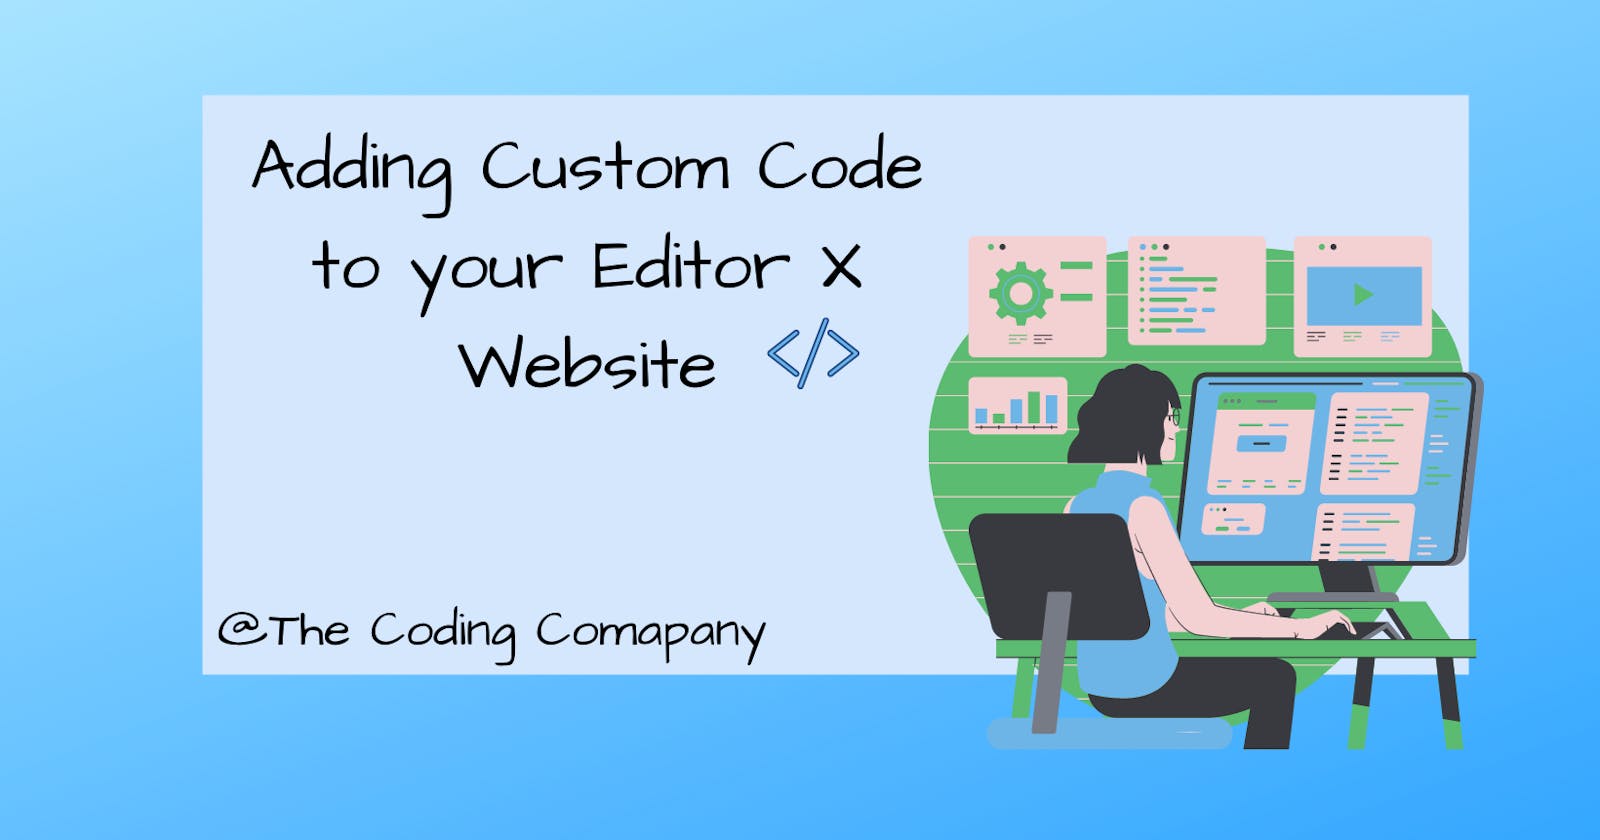 Adding Custom Code to your Editor X Website